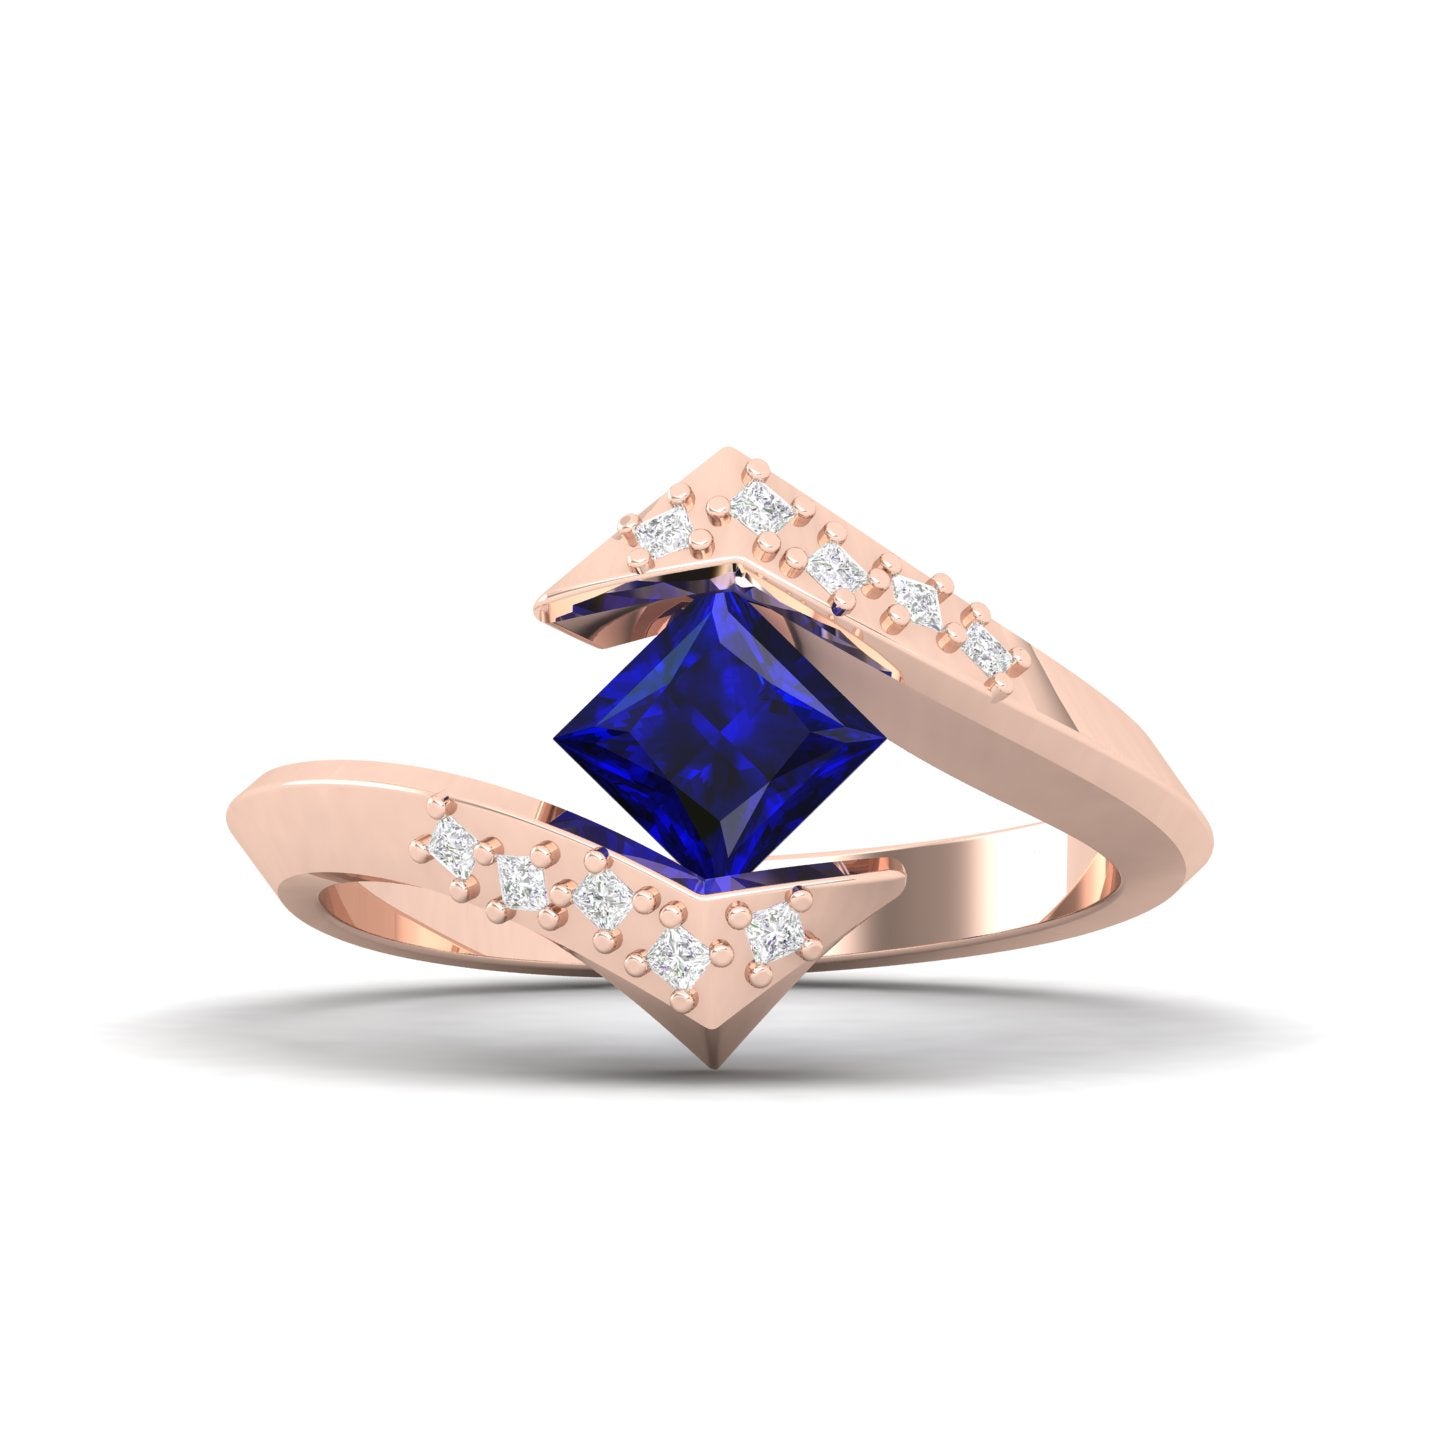 Maurya Square Blue Sapphire Supernova Bypass Engagement Ring